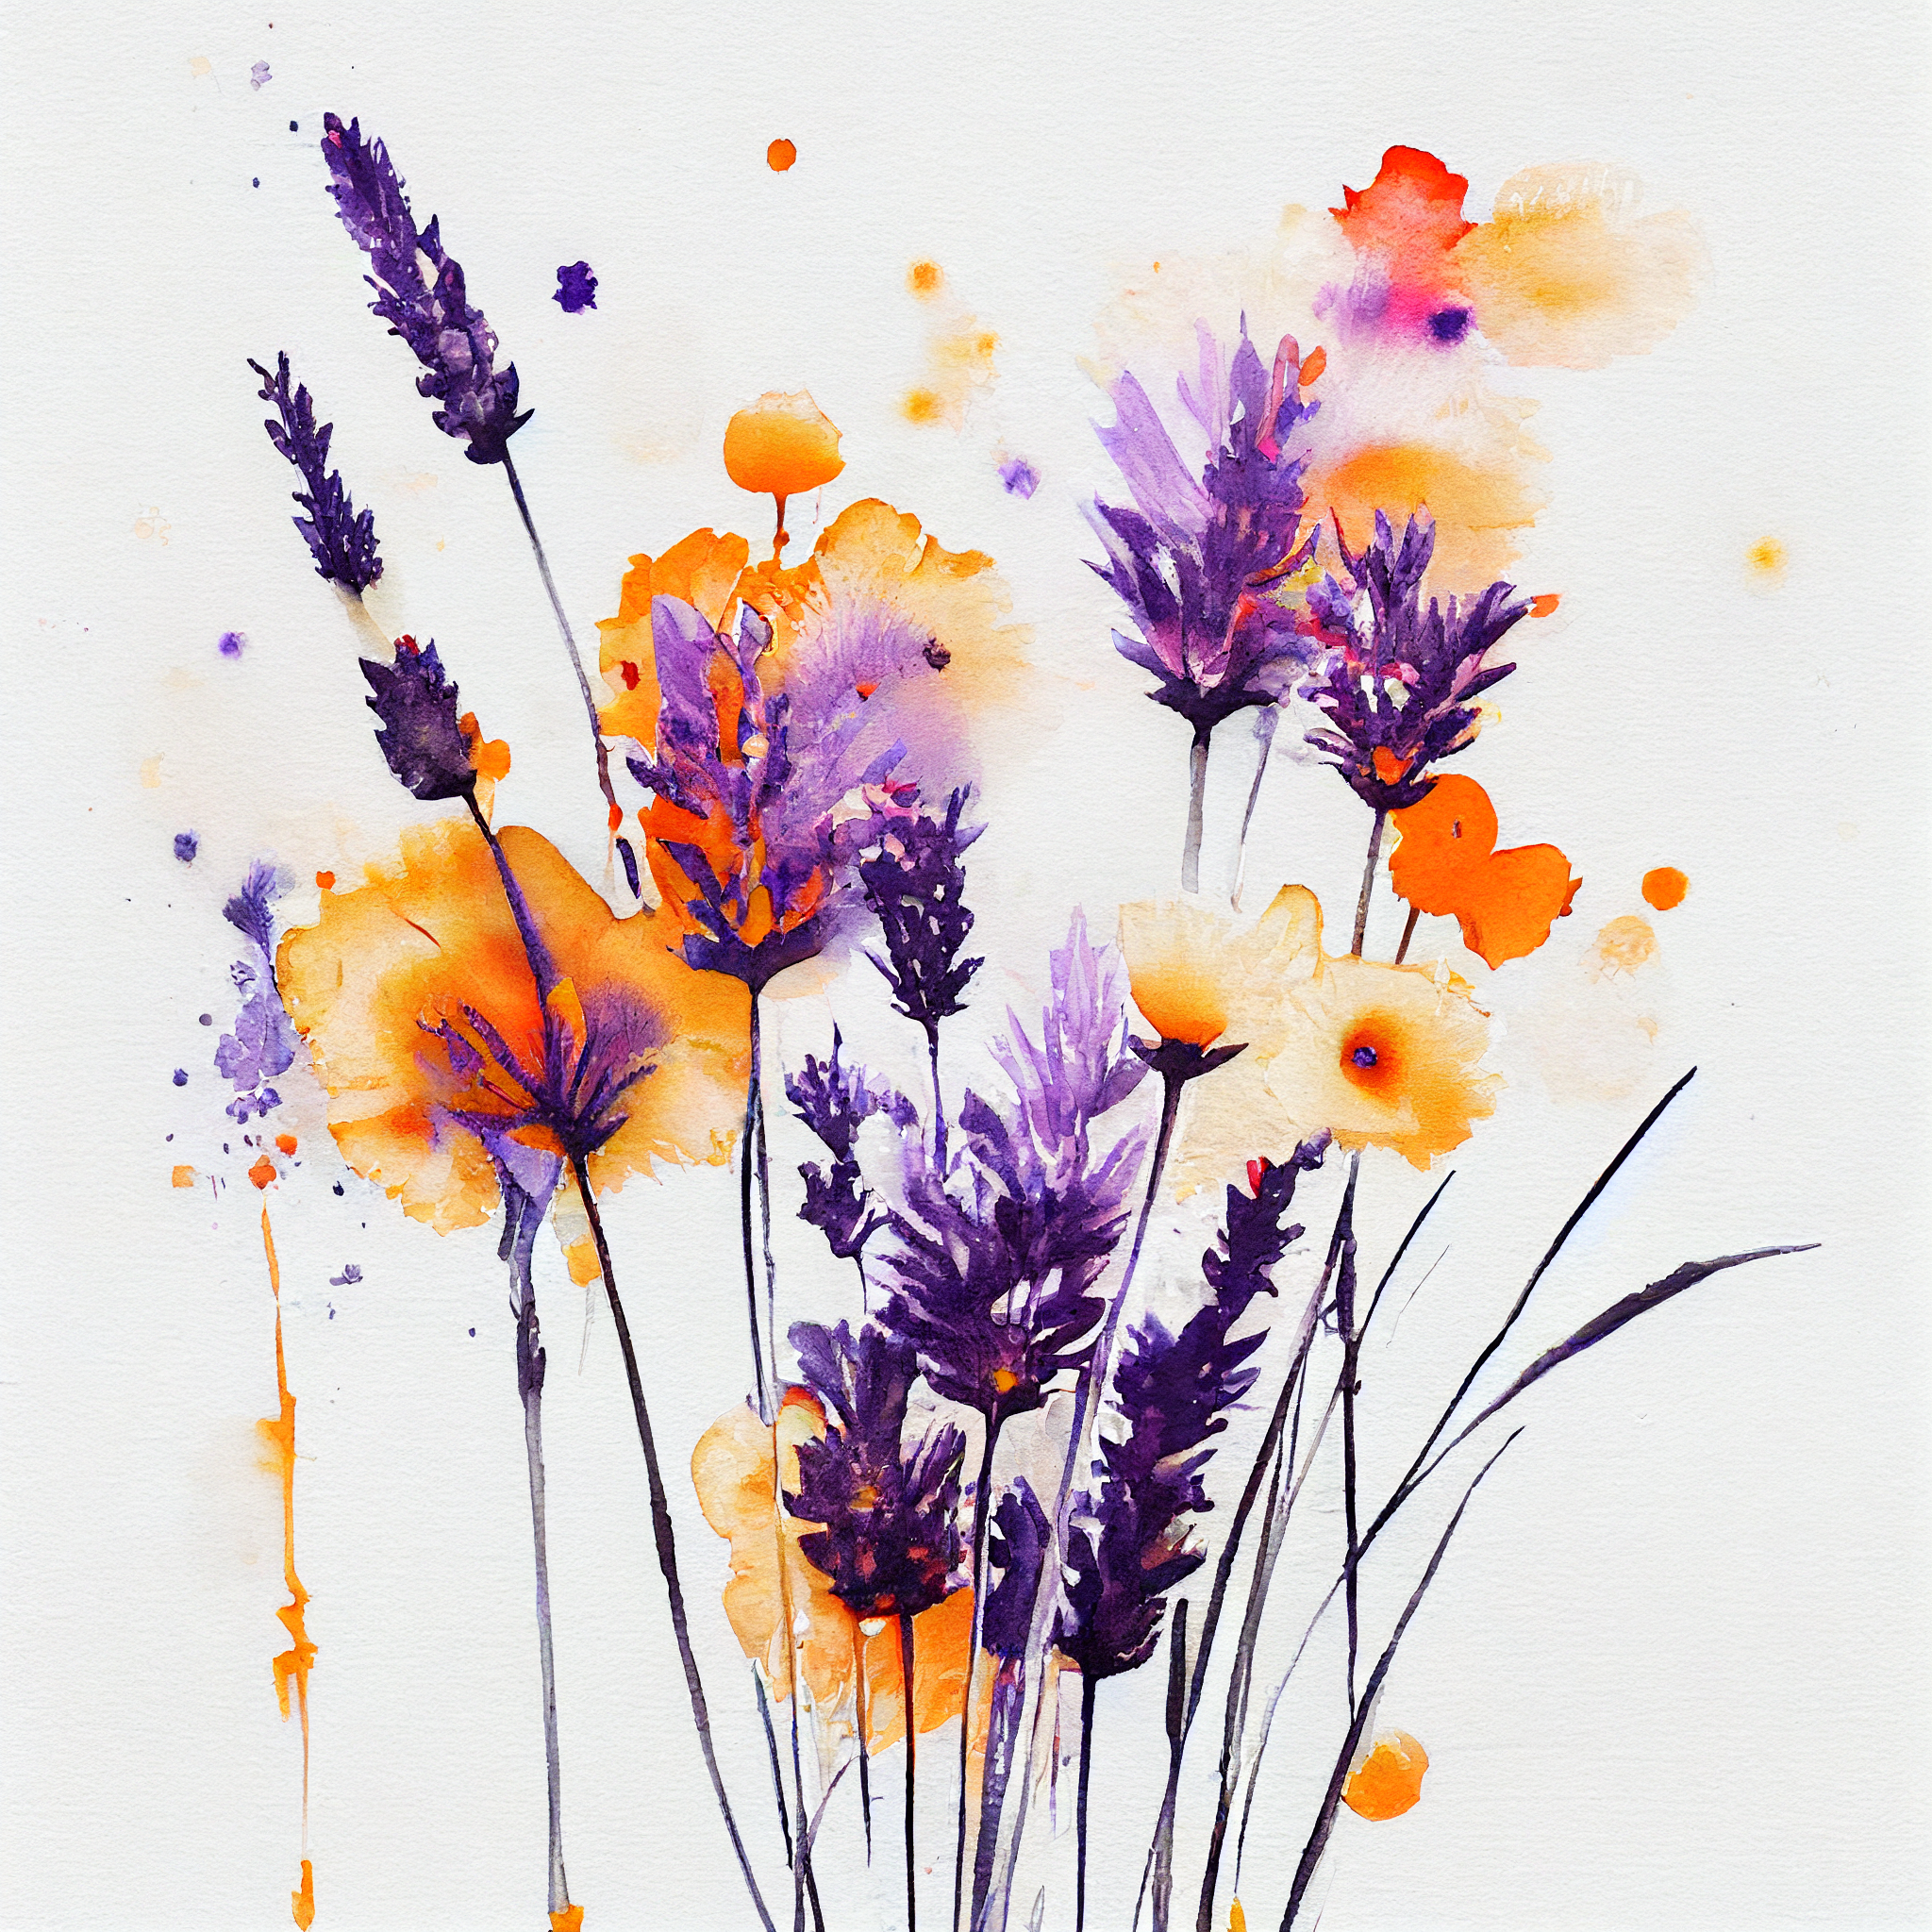 "Blooming Beauty: Watercolor Print of Purple and Orange Flowers"